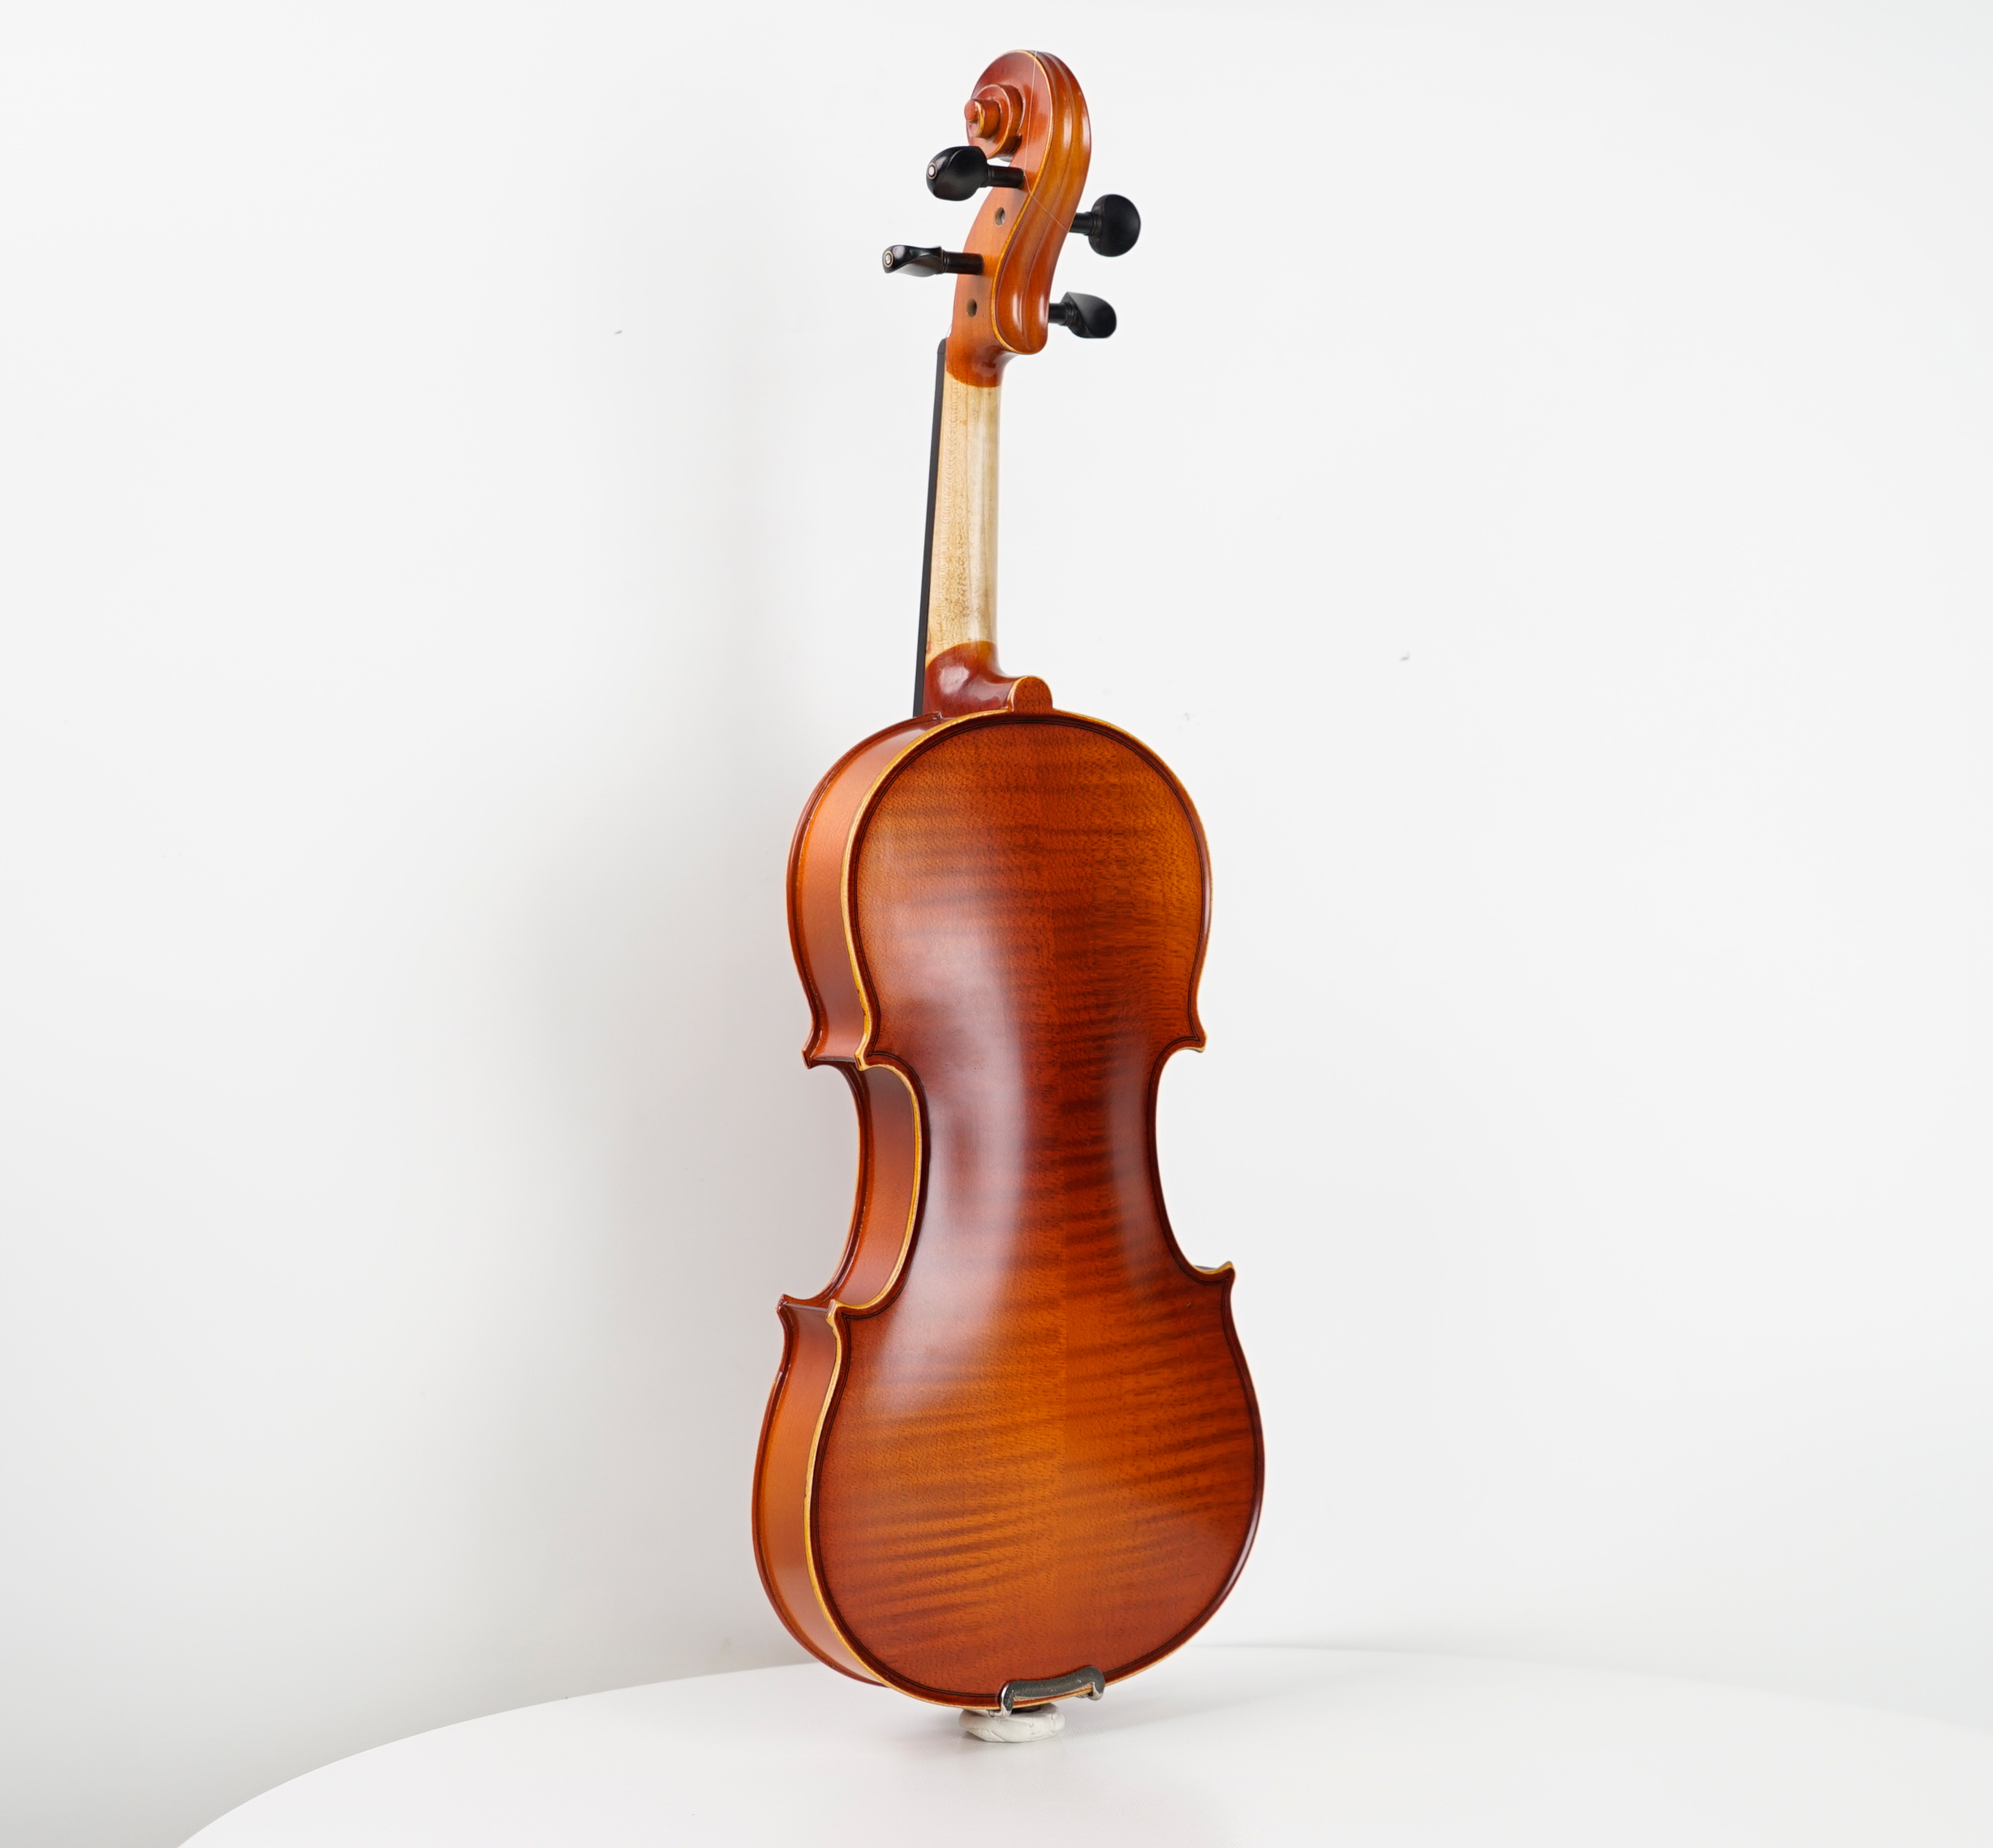 Adult Violin 4/4 All Solid Wood Violin Profesional(VG210H)